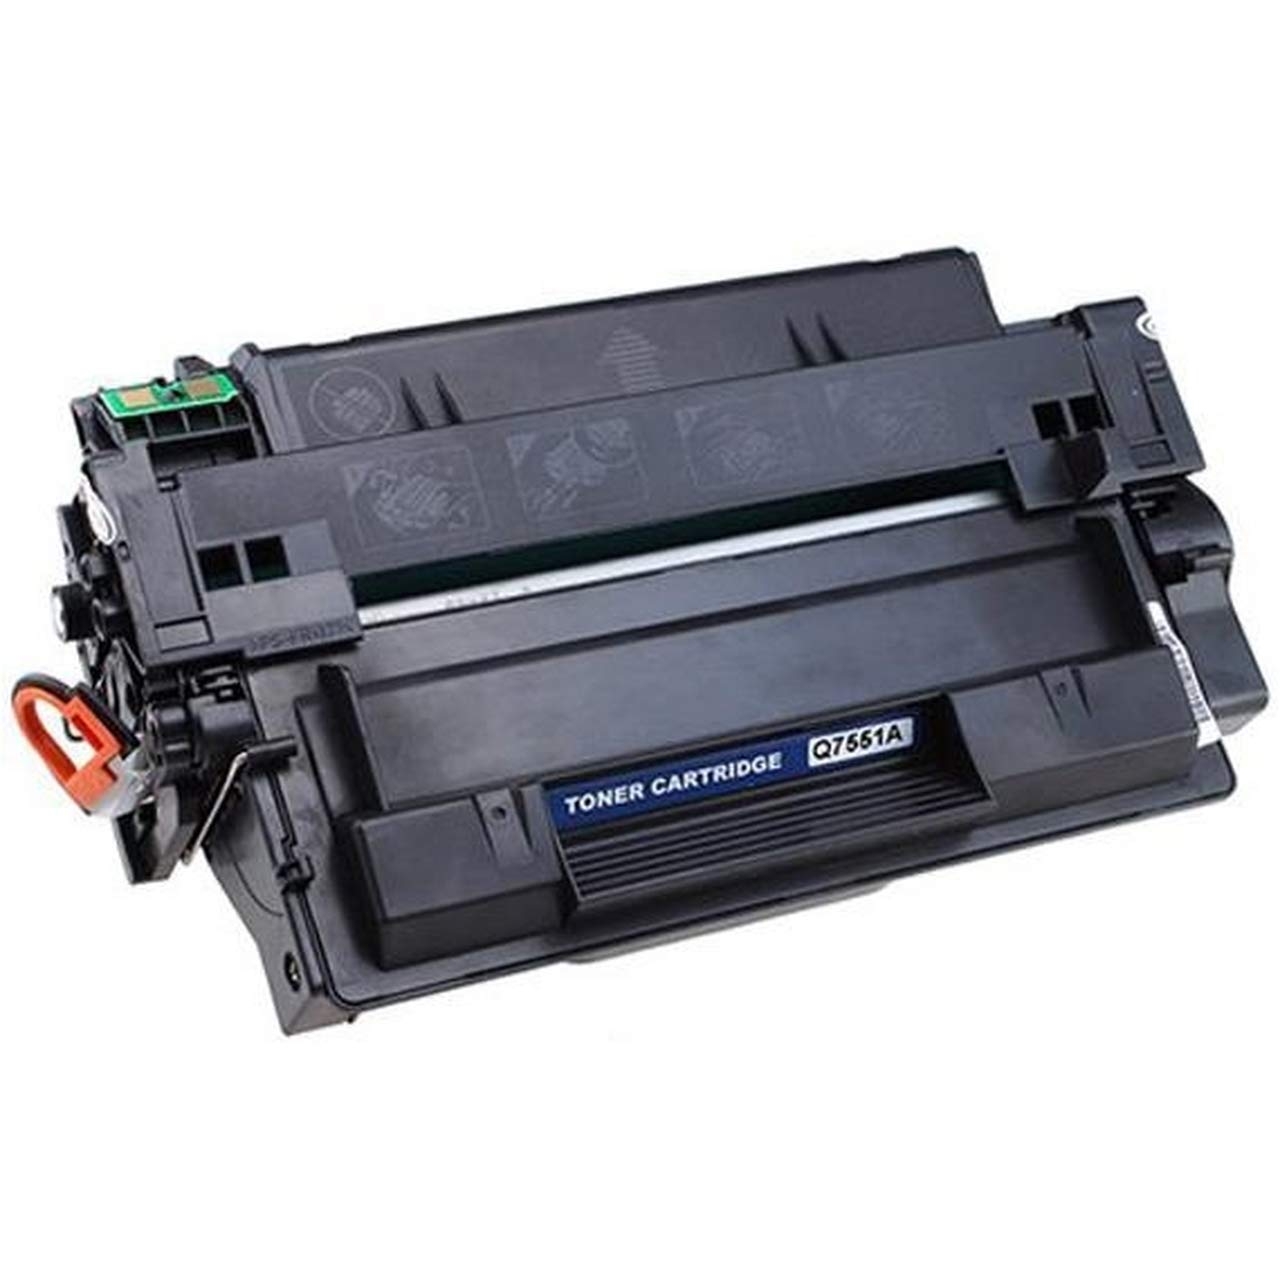 51A Black, Q7551A Toner Cartridge for Hp P3005, P3005D, P3005N, P3005Dn, P3005X, M3027, M3027X, M3035, M3035Xs Printer